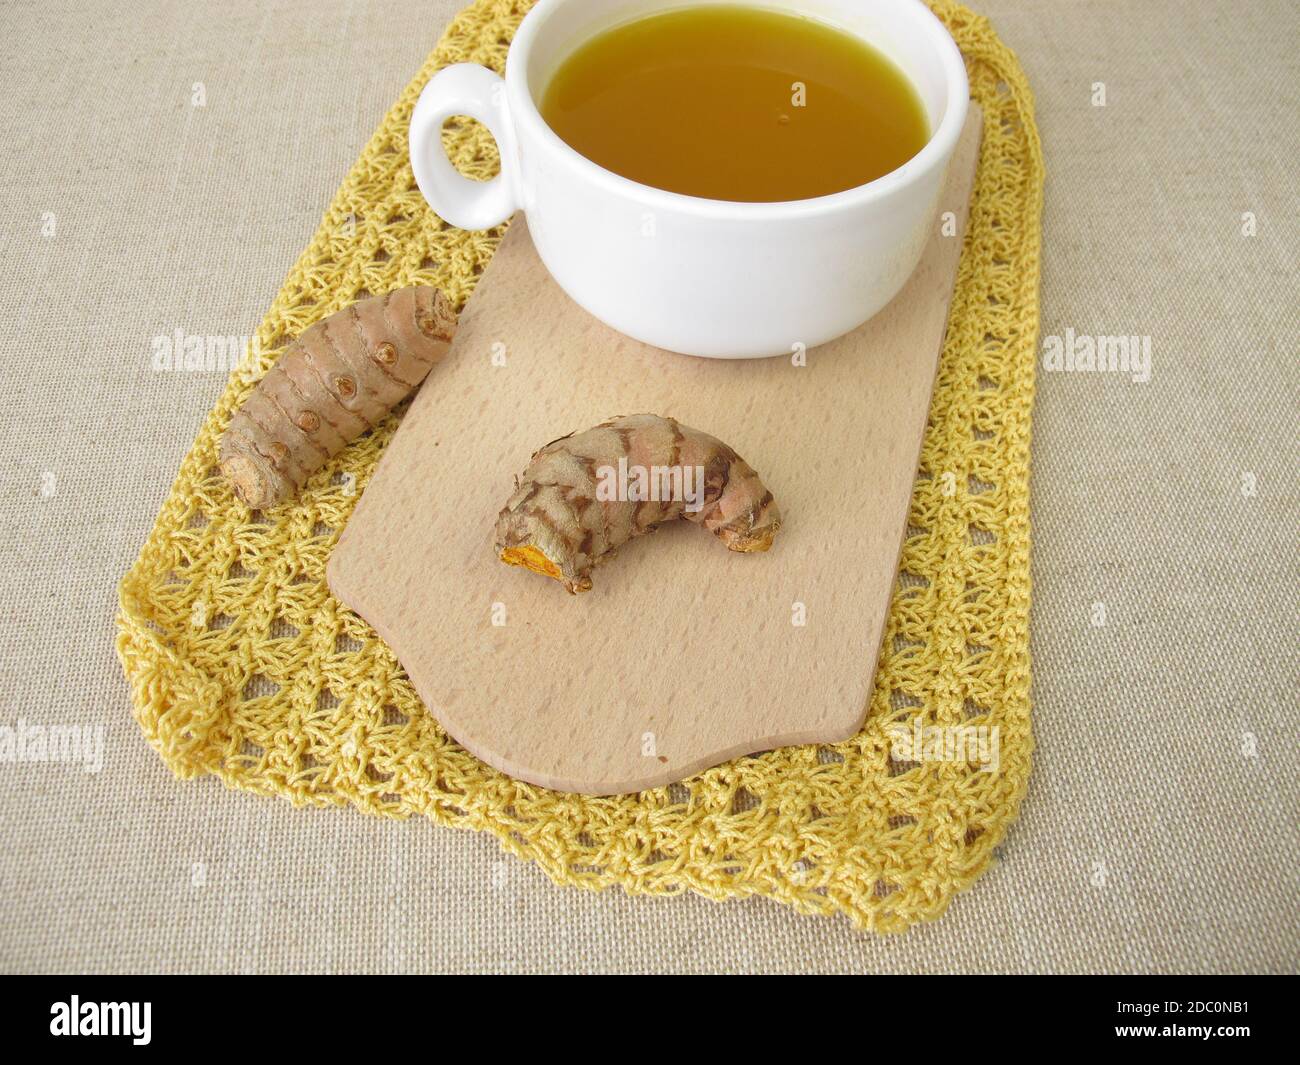 Golden yellow tea with Turmeric Stock Photo